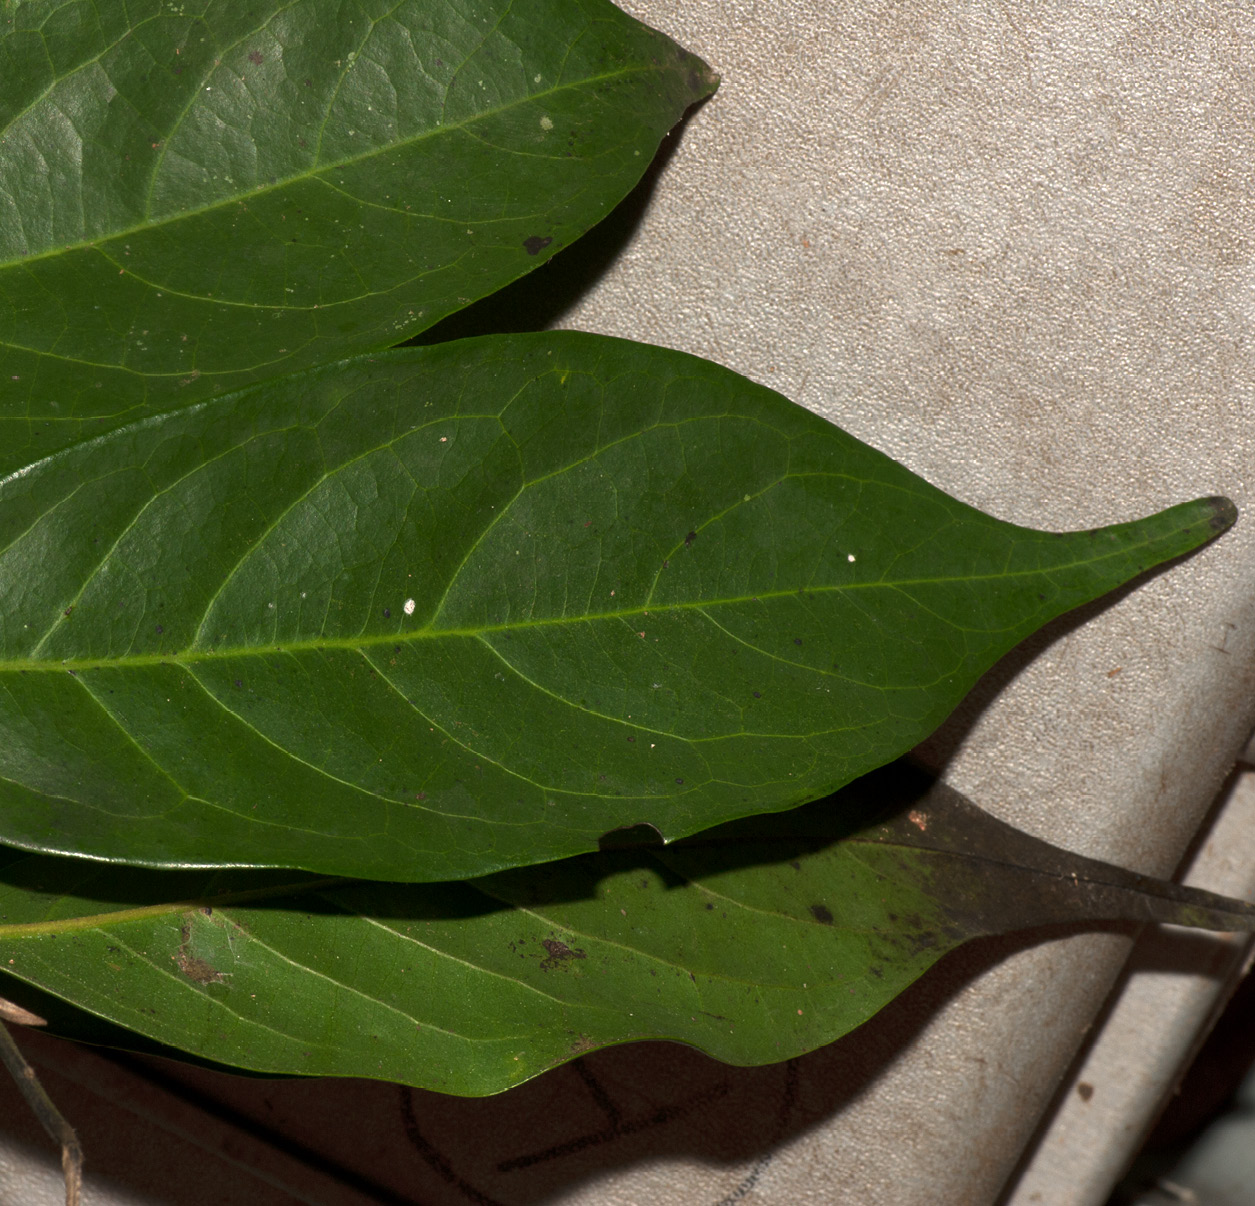 Greenwayodendron suaveolens Mature leaf, upper surface.